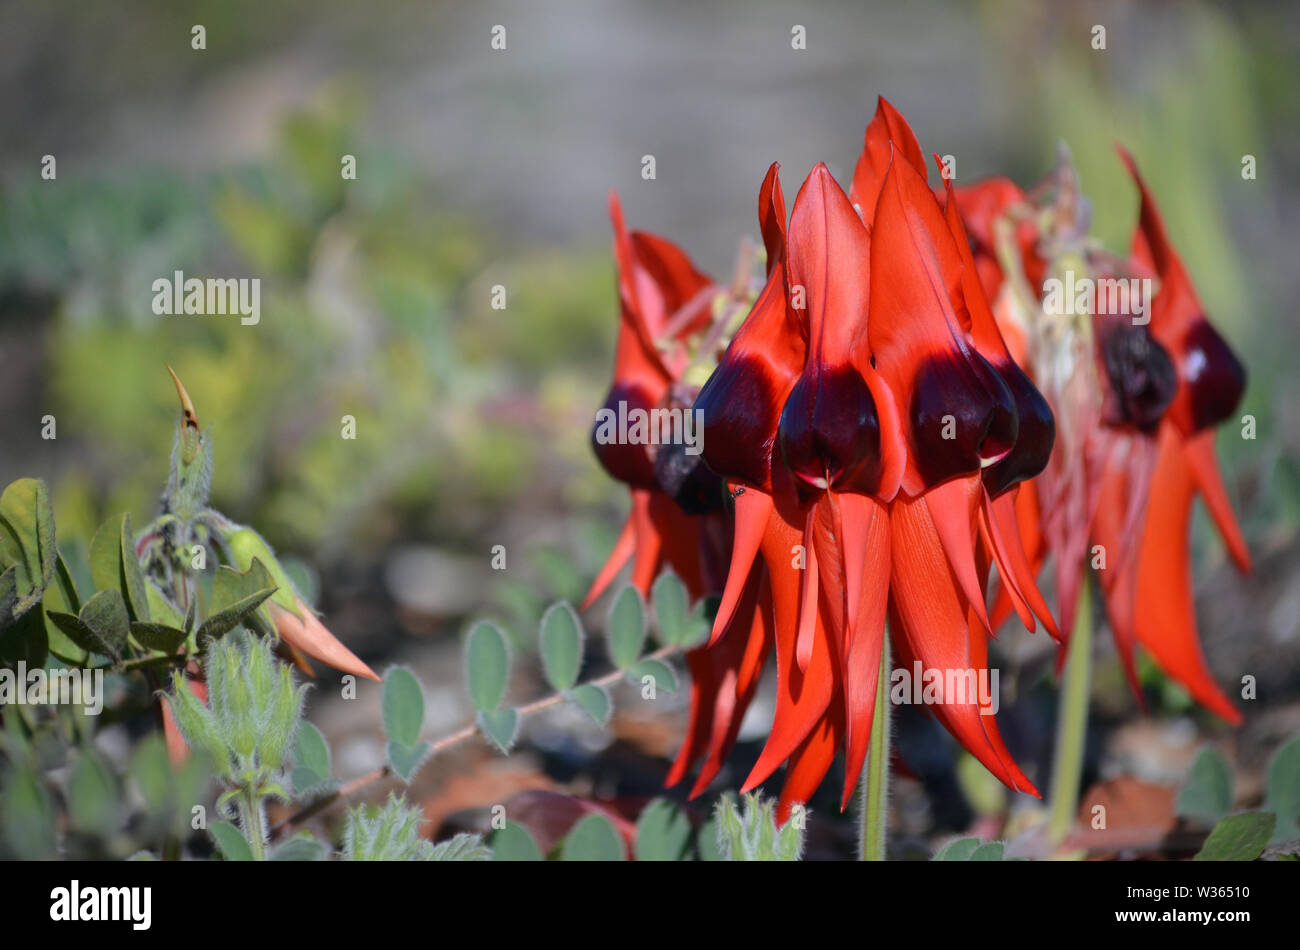 Nativa de Australia Sturts Desert Pea flores, Swainsona formosa, la familia Fabaceae. Emblema floral de Australia del Sur. Foto de stock